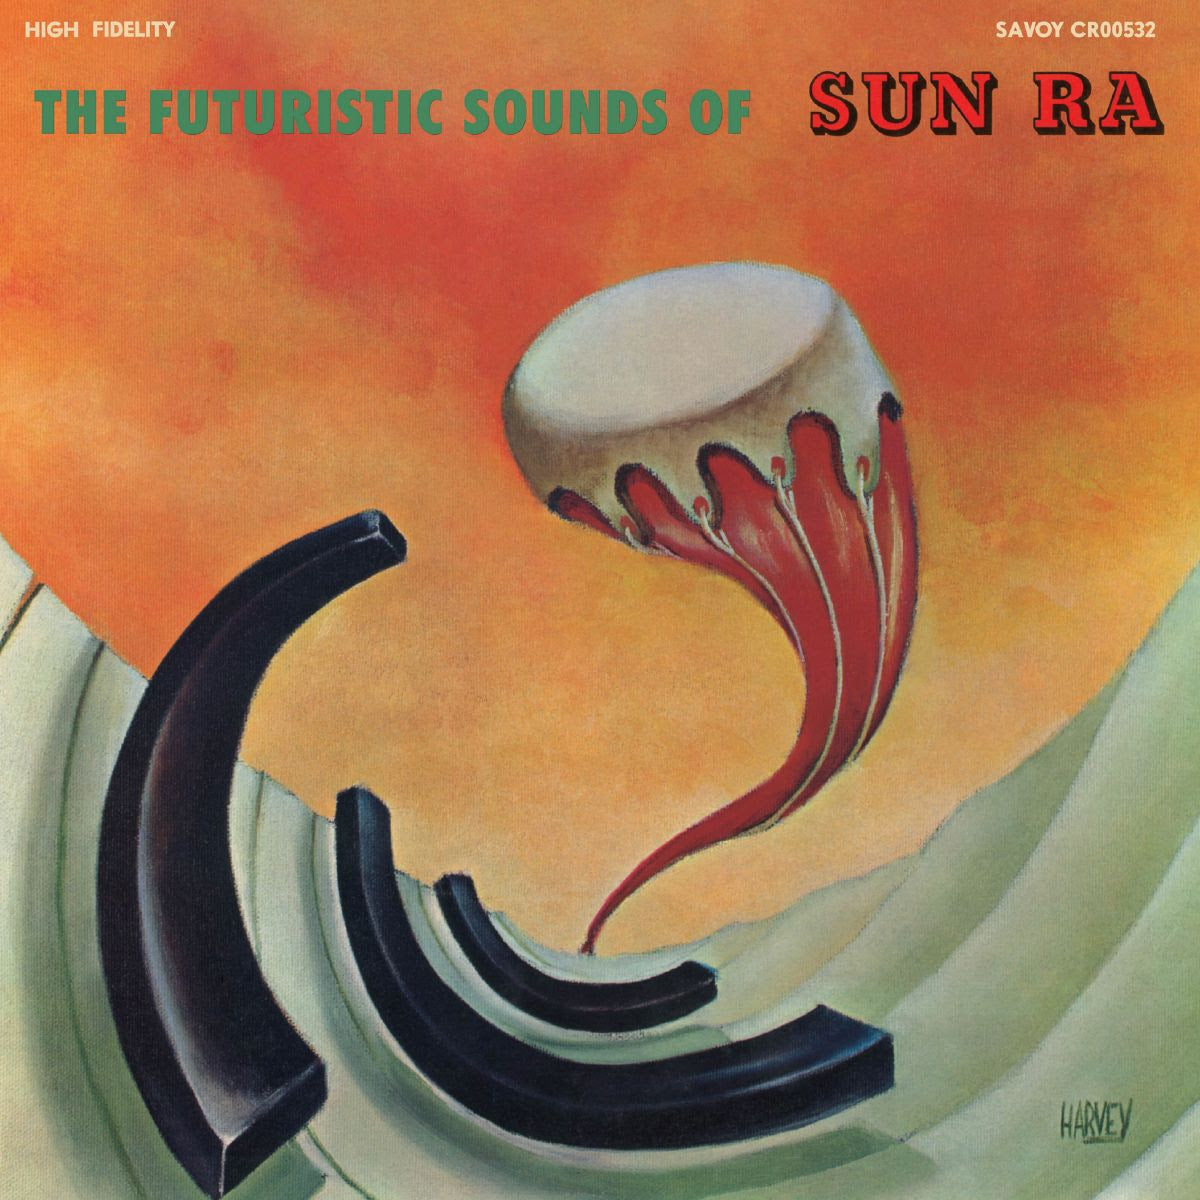 Sun Ra – The Futuristic Sounds Of Sun Ra | Buy the Vinyl LP from Flying Nun Records